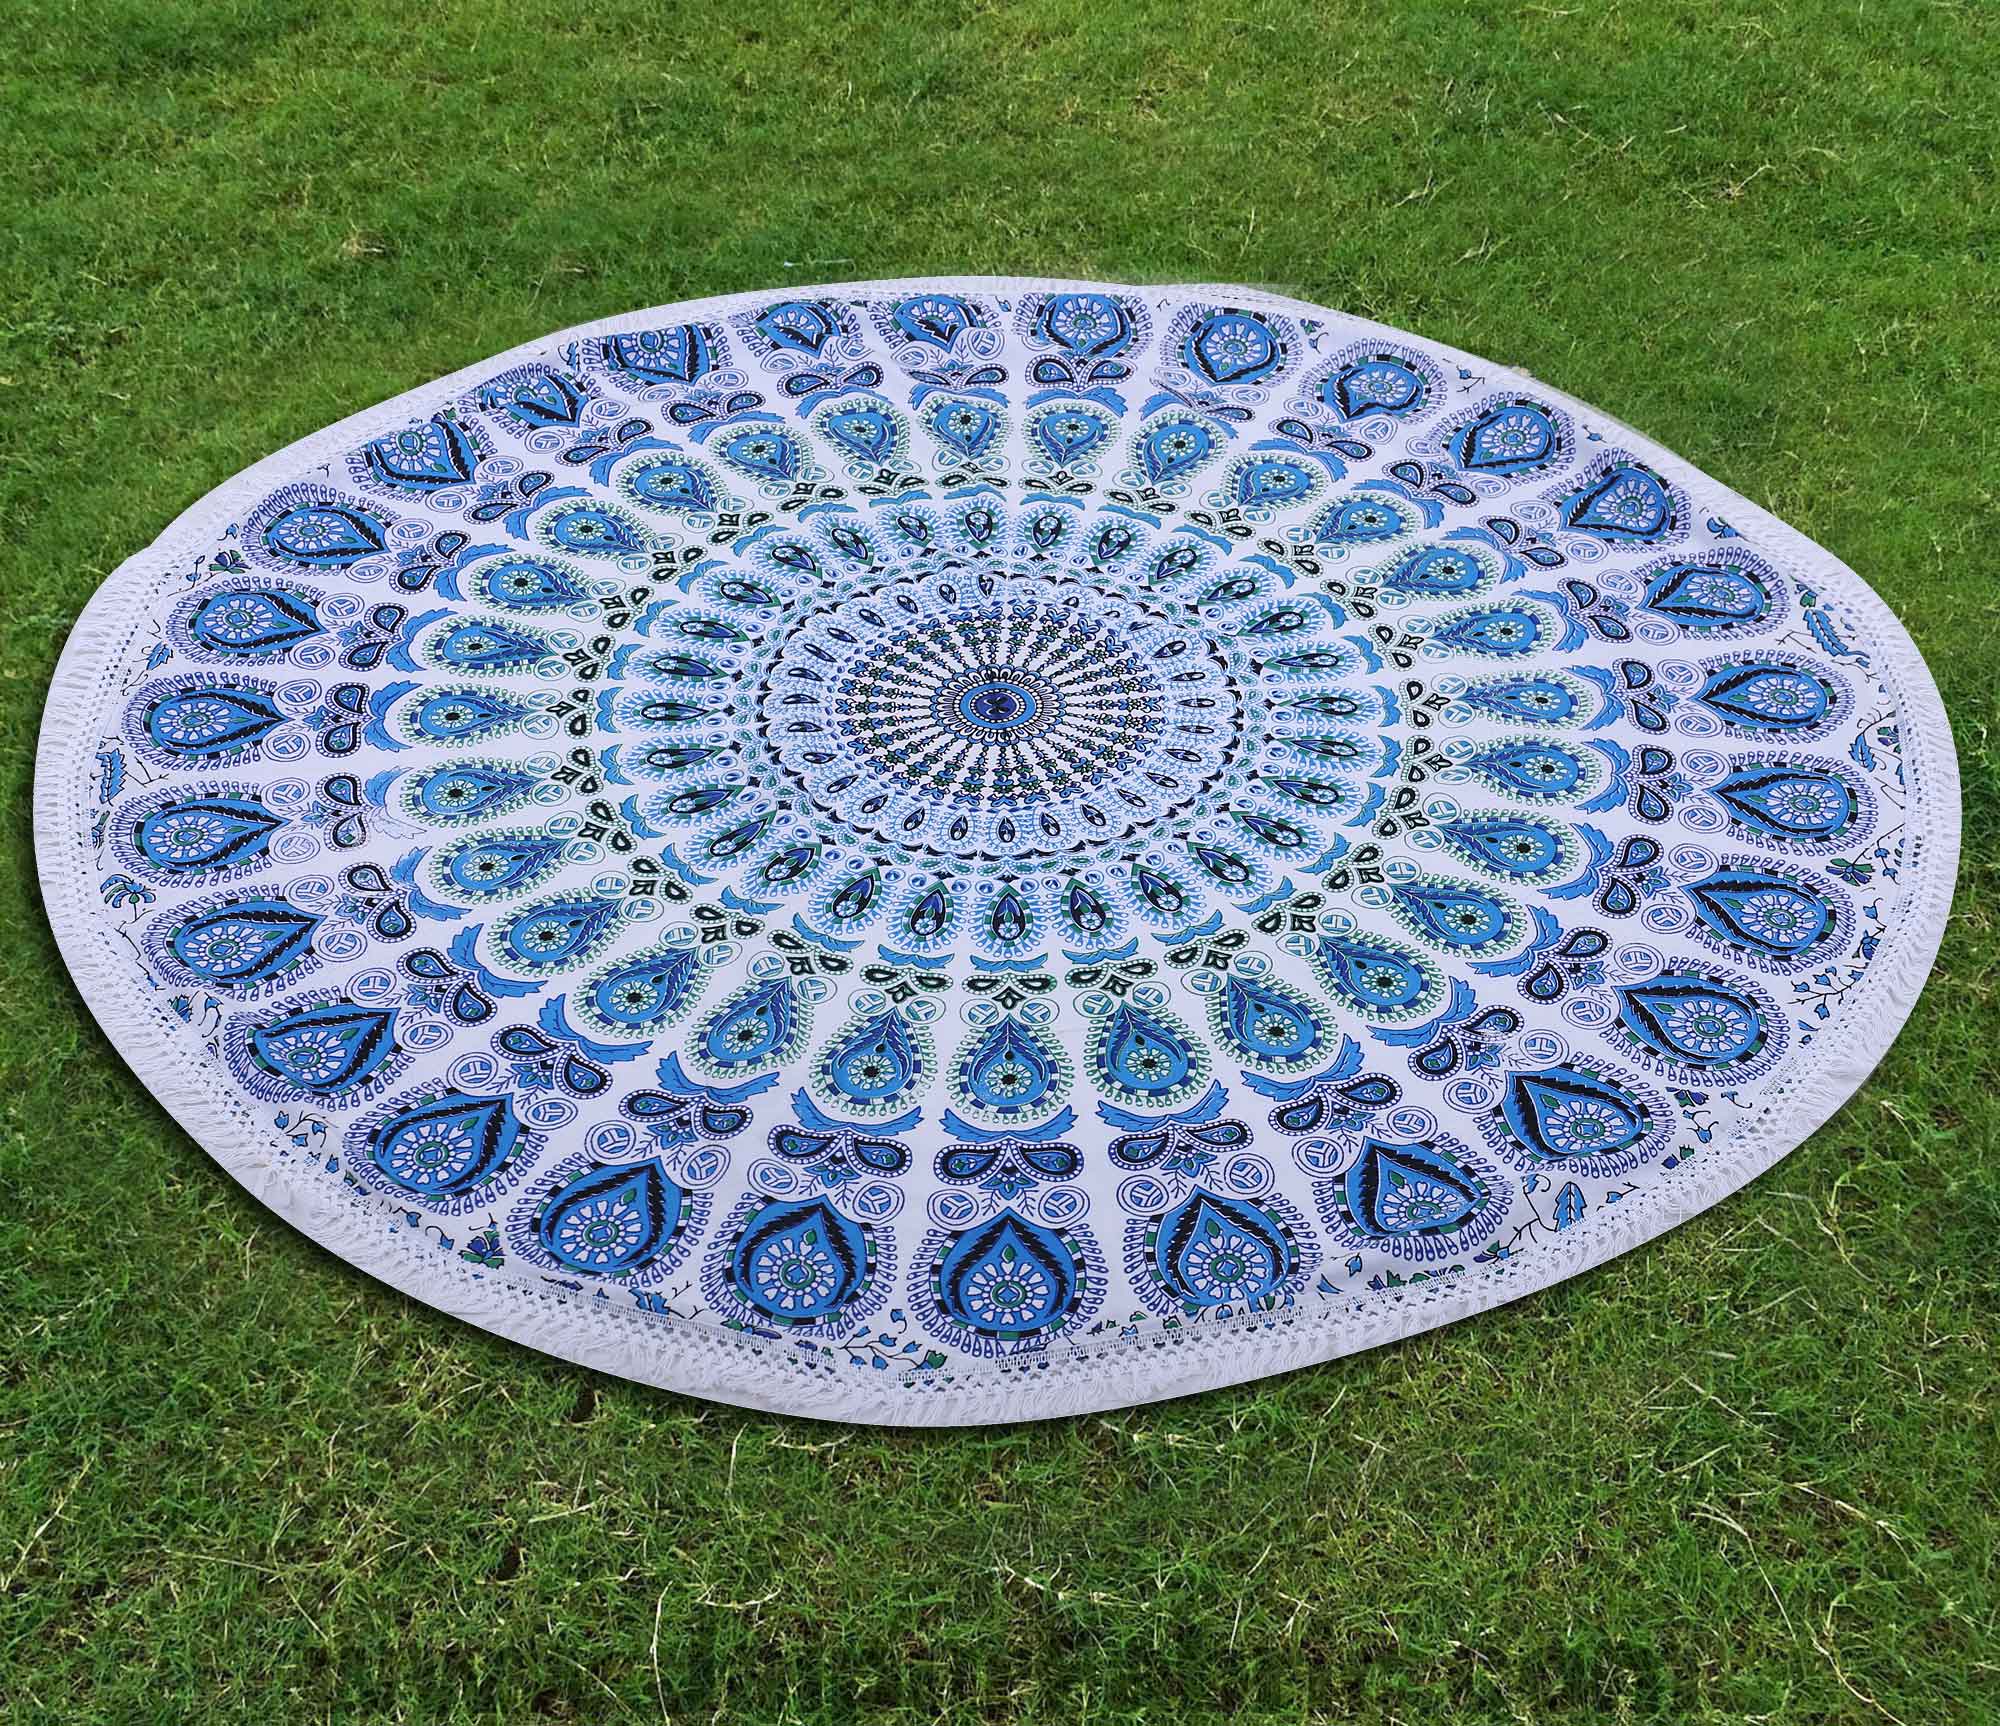 Blue Mandala Printed Wall Hanging Round Roundies Beach Throw Cotton Yoga Mat Table Cloths Table Cover Picnic Mat Tapestry Picnic Blanket Mat 72